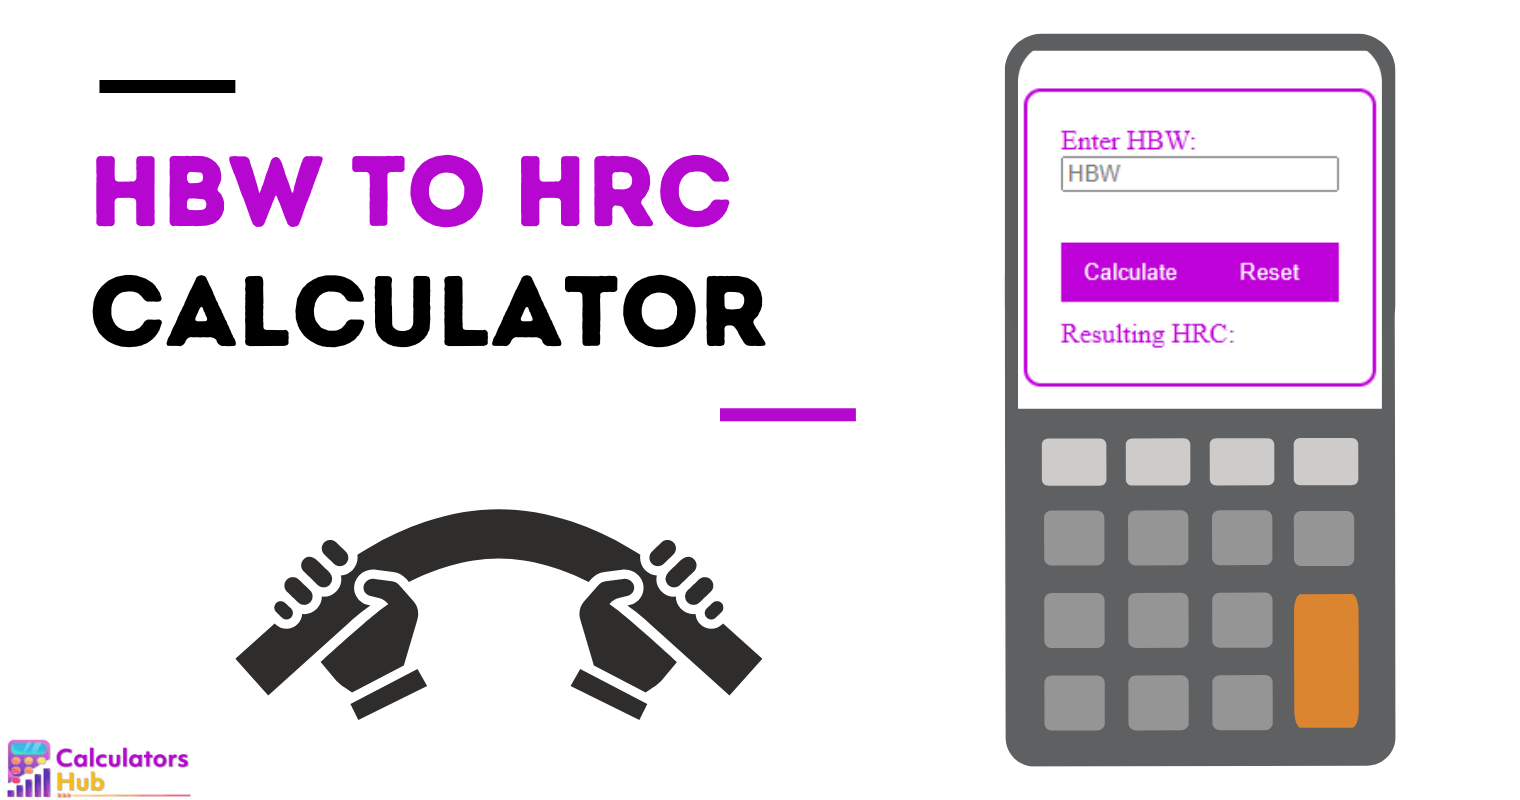 HBW to HRC Calculator